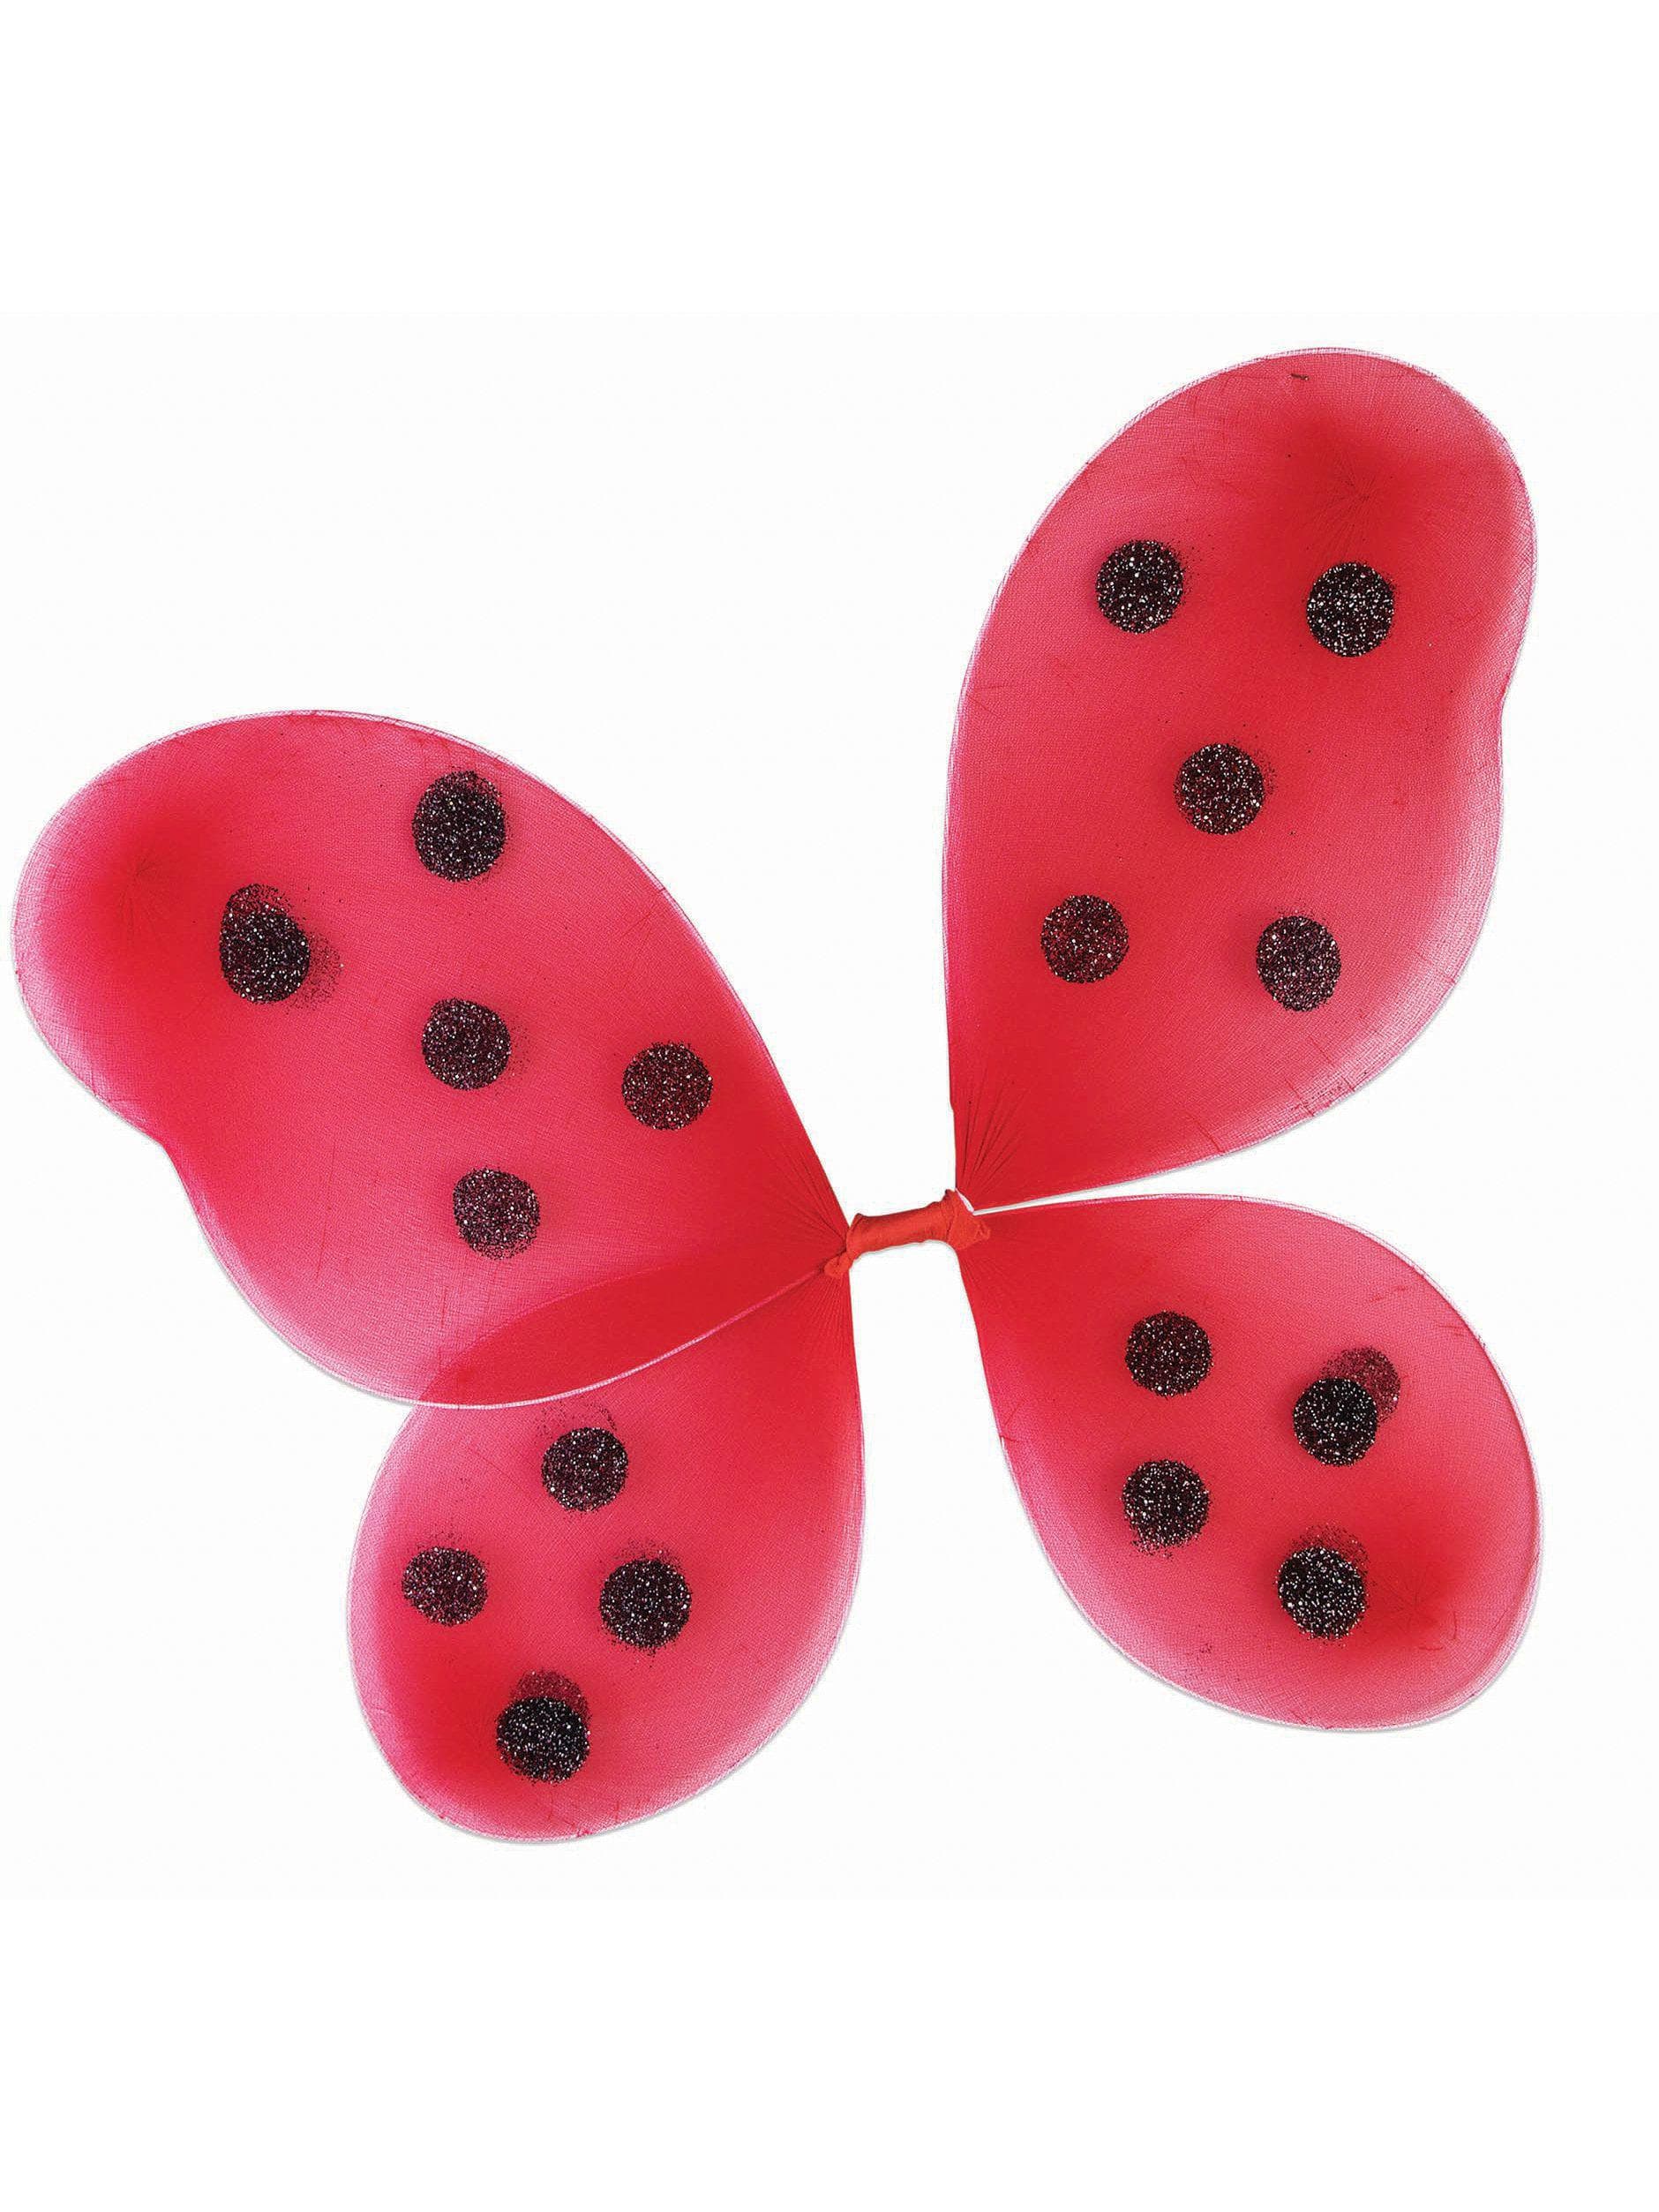 Kids' Red Polka Dot Ladybug Wings - costumes.com